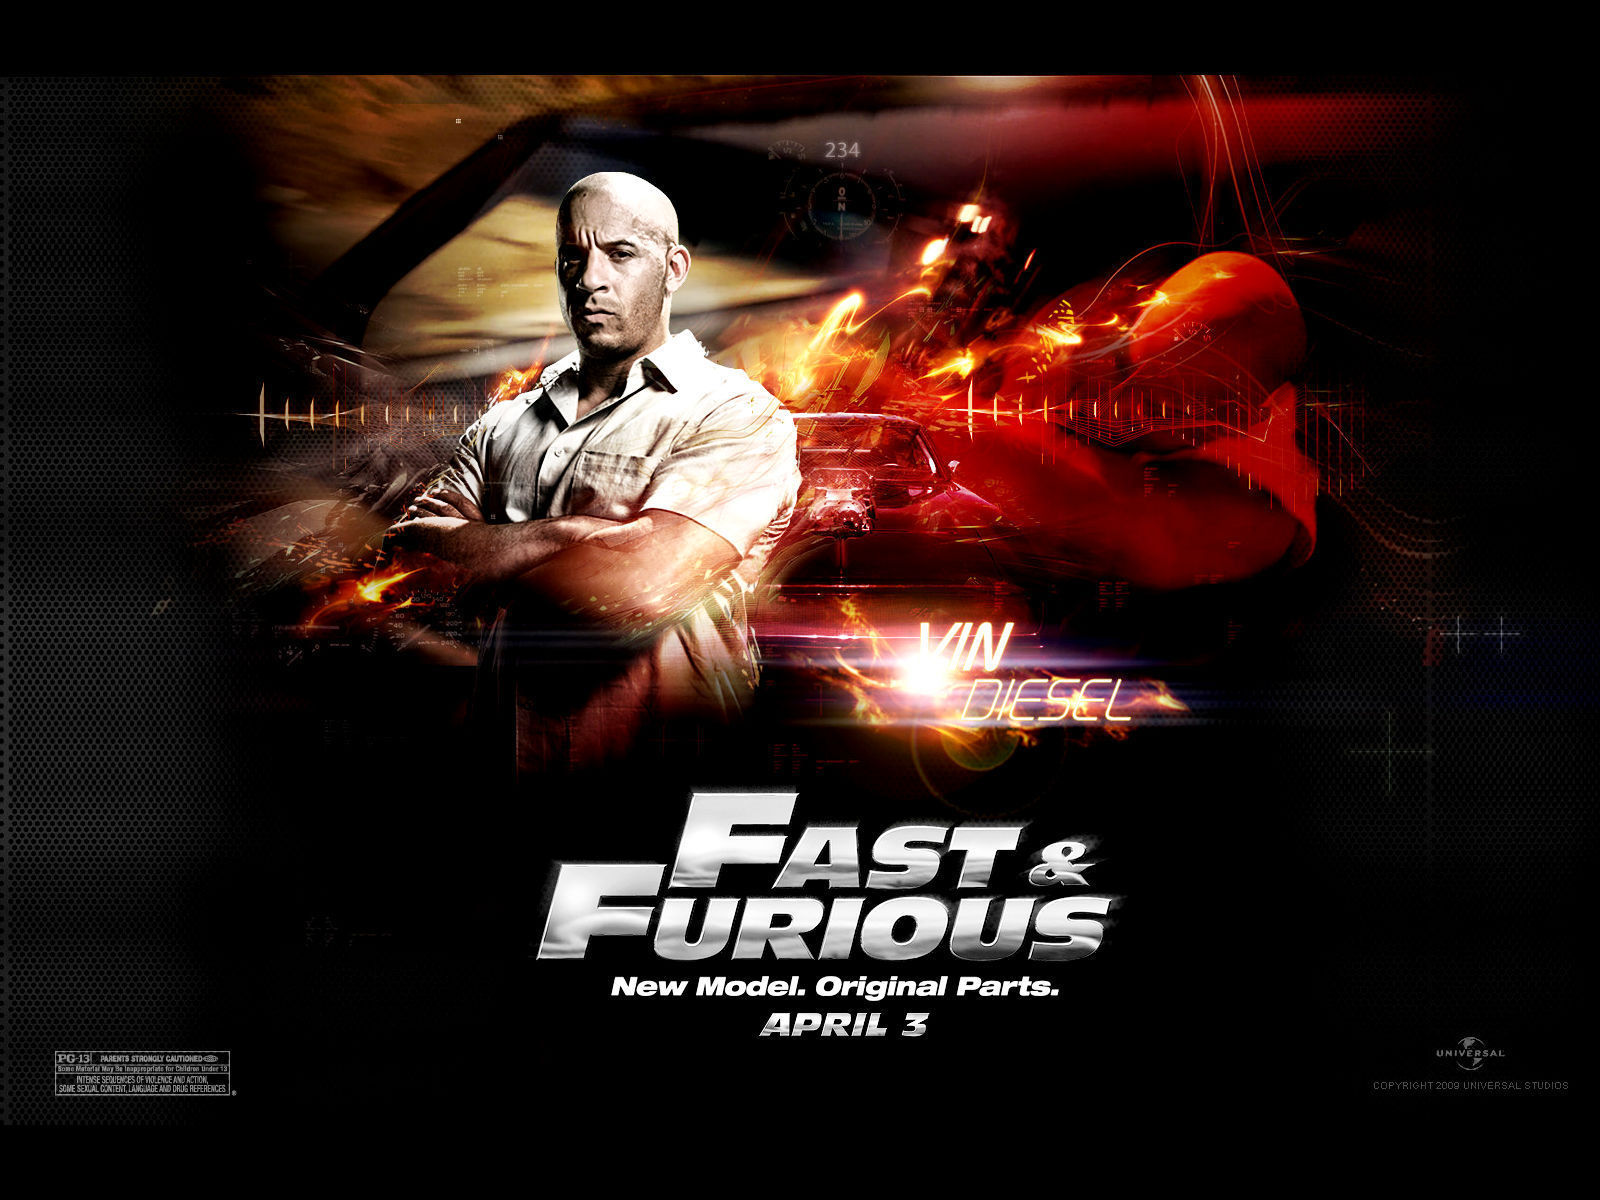 Fast & Furious - Upcoming Movies Wallpaper (5012511) - Fanpop1600 x 1200